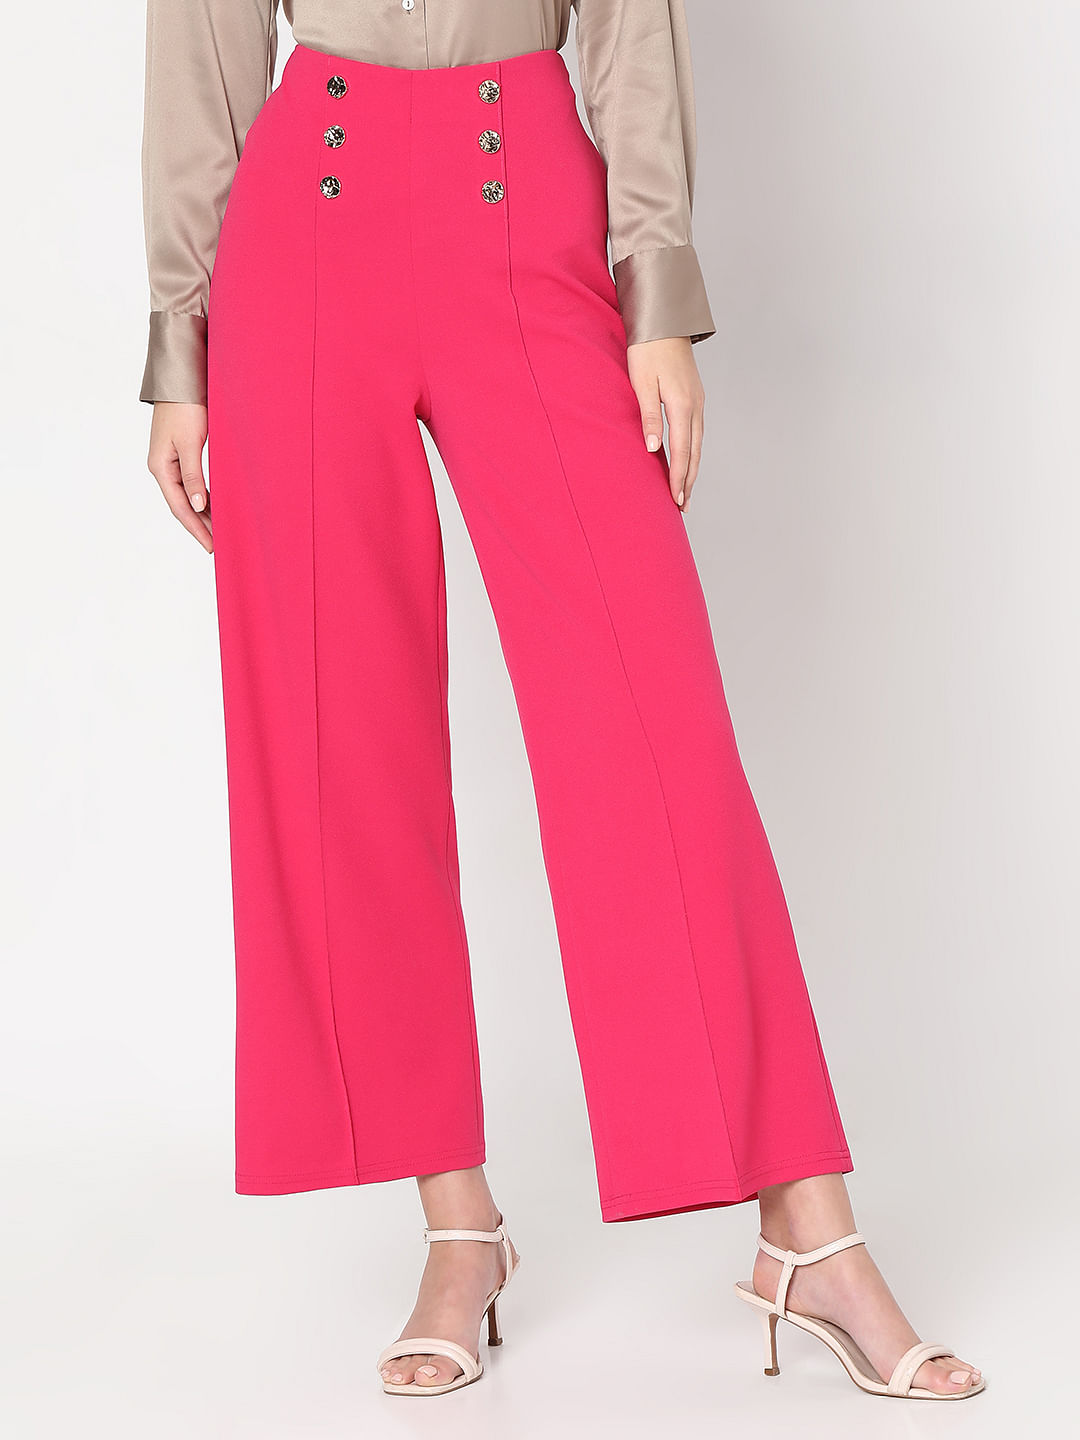 Pink corduroy pants – Bobo Choses